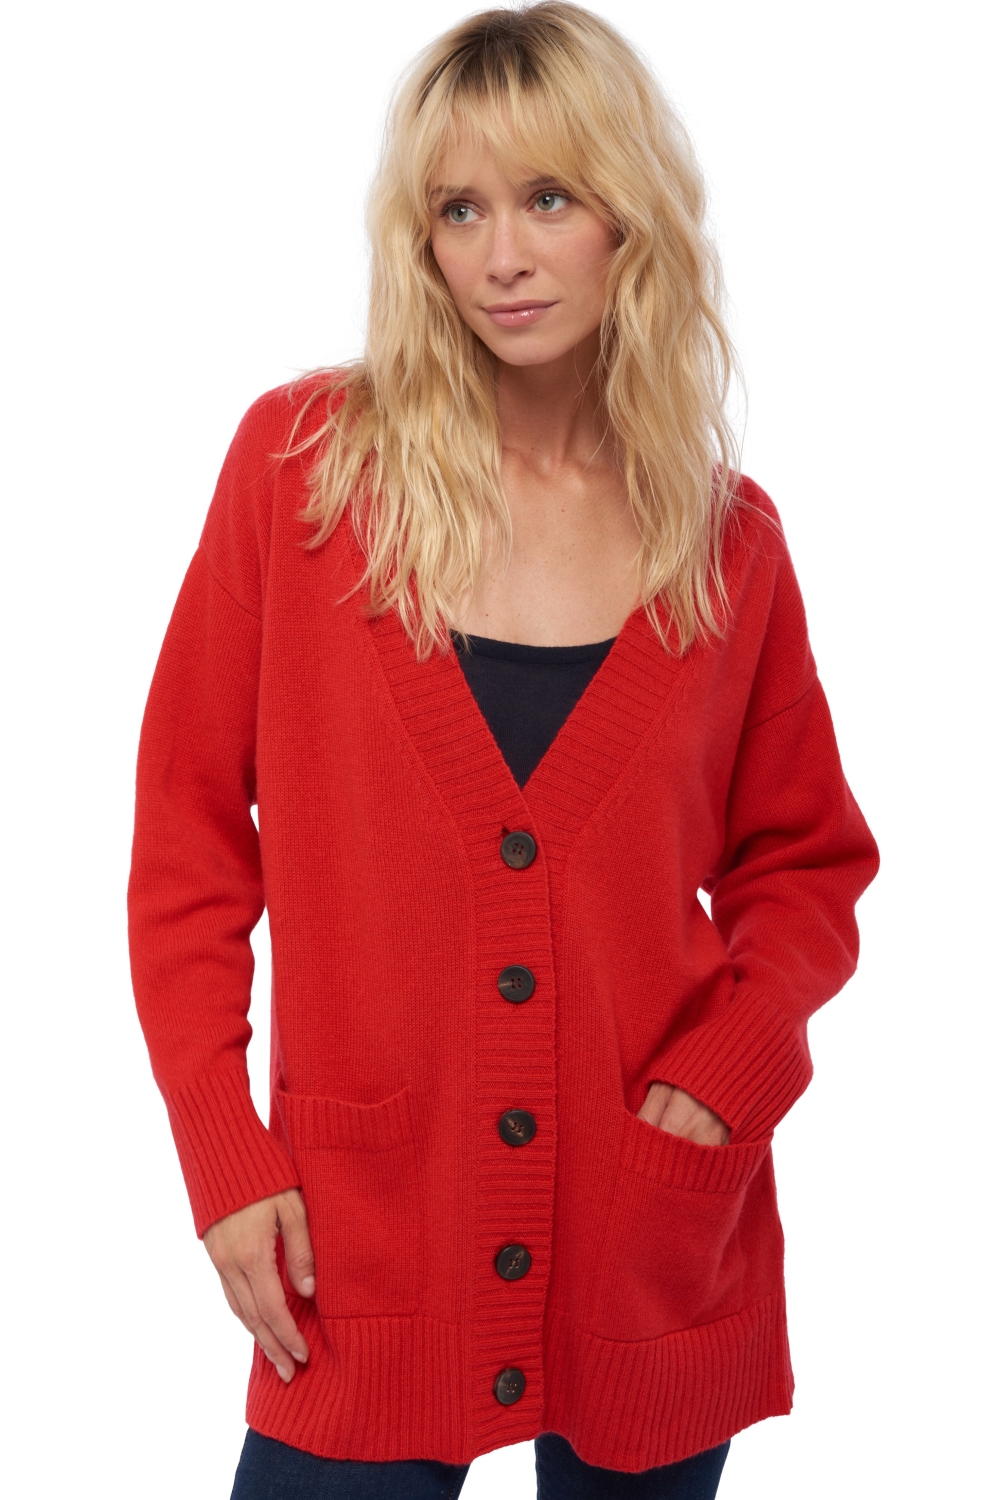 Cachemire robe manteau femme vadena rouge s